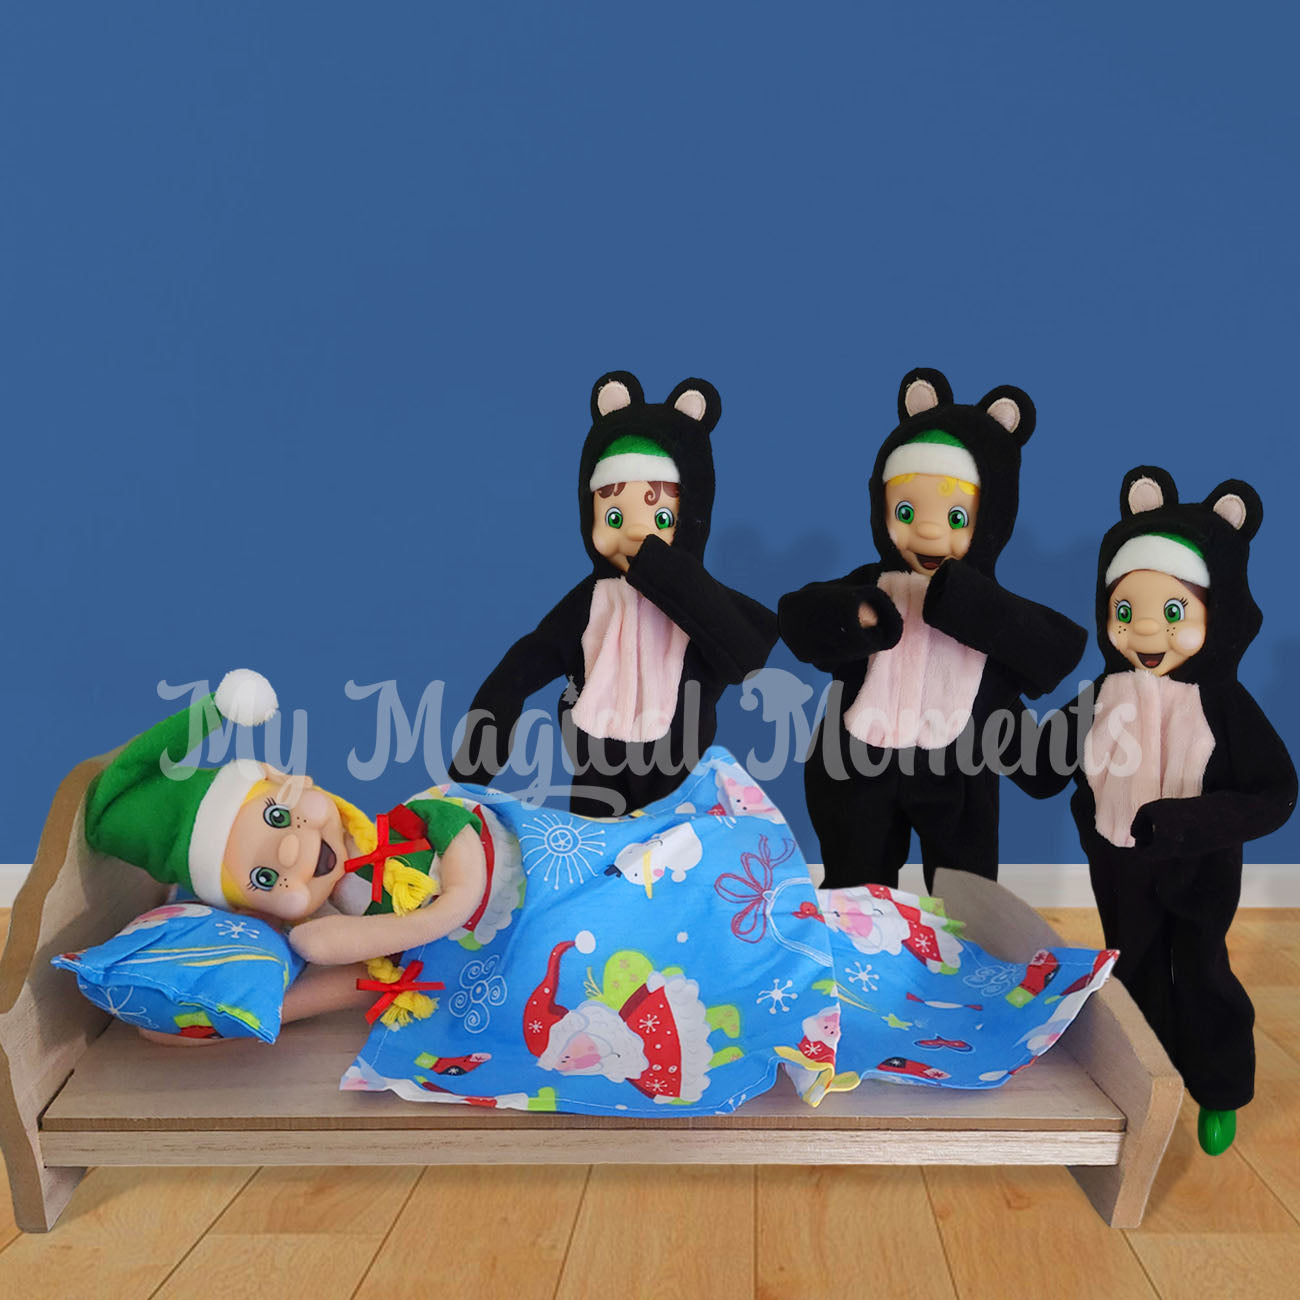 elf laying in mini bed, sleeping from 3 elves dressed as bears